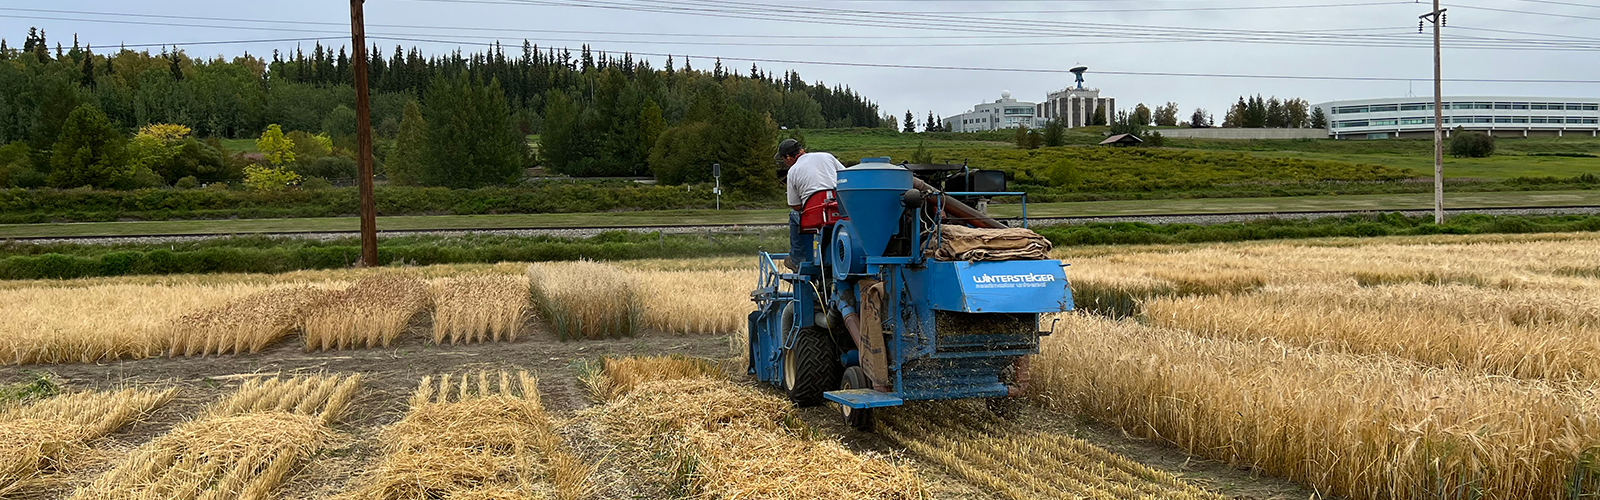 Person on columbine harvesting wheat at UAF experimental farm.